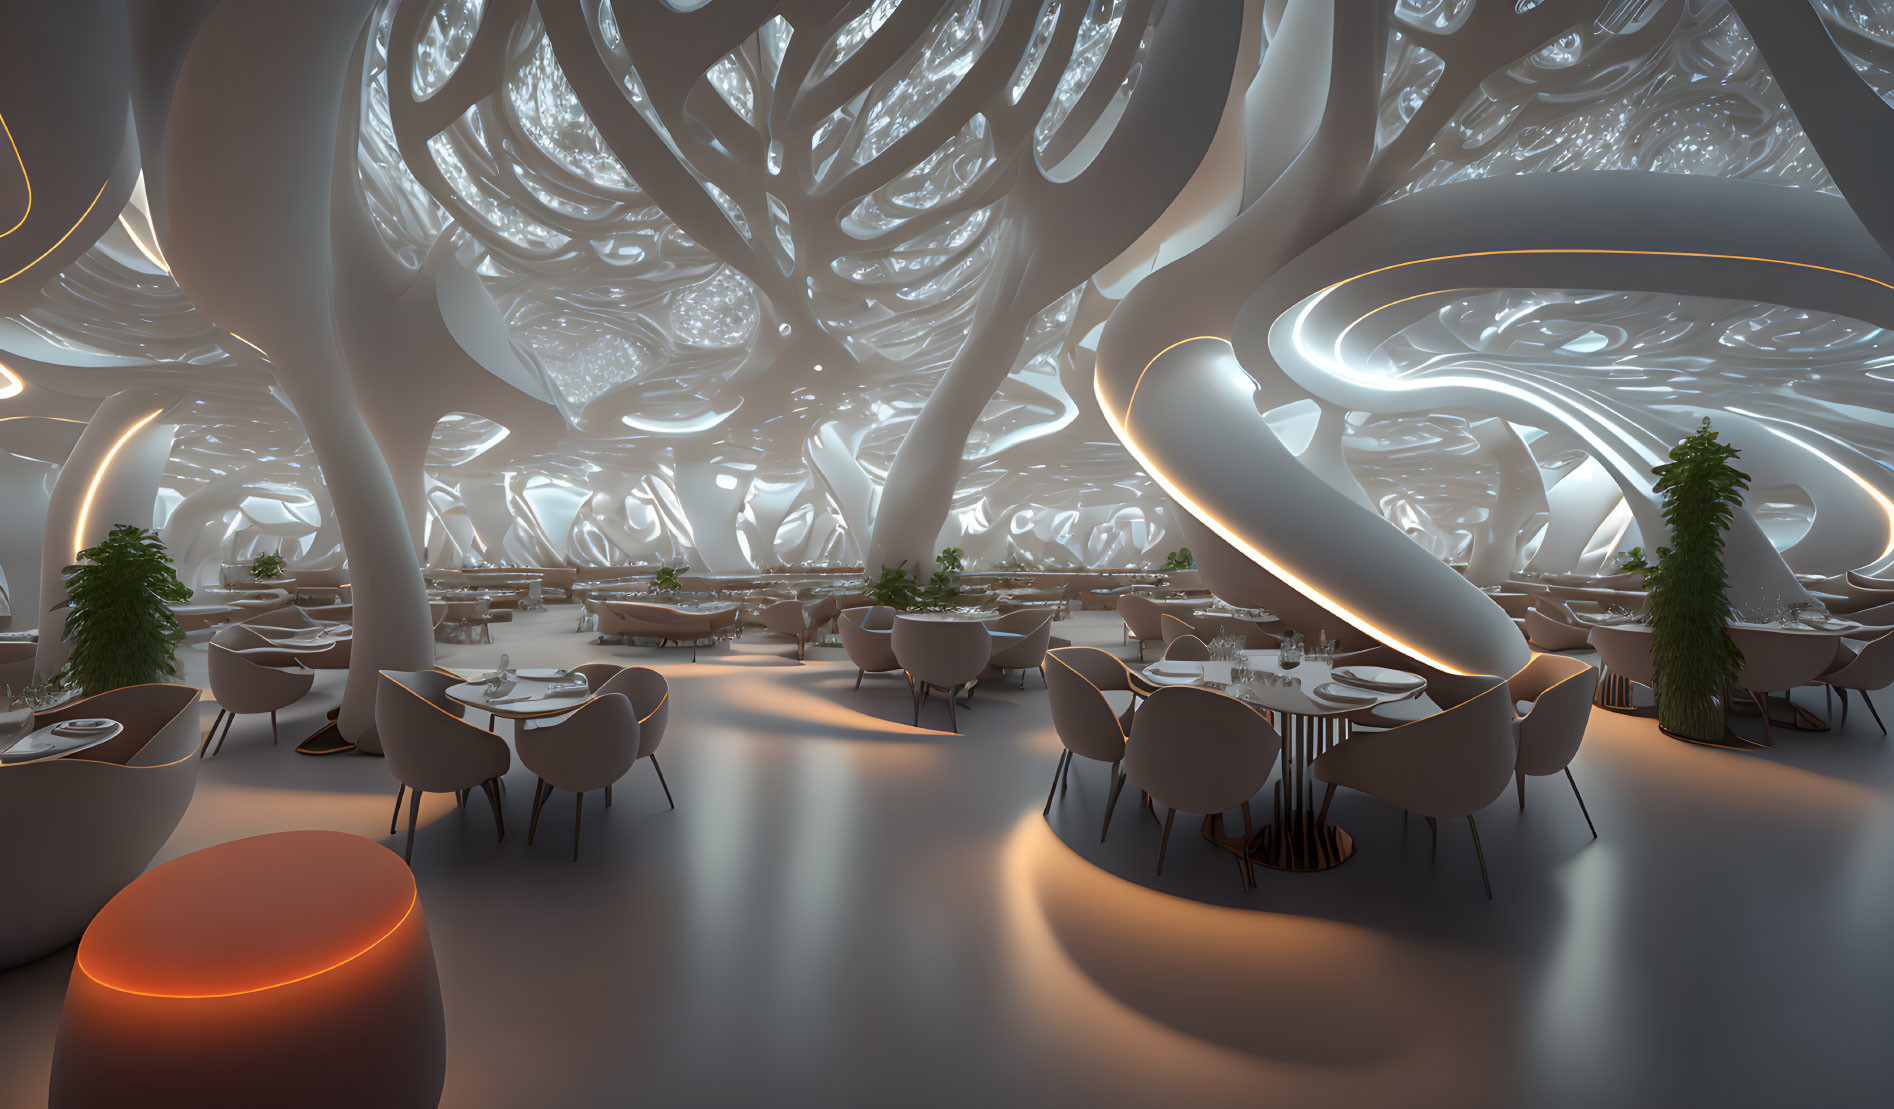 Organic Tree-like Structures in Futuristic Restaurant Interior